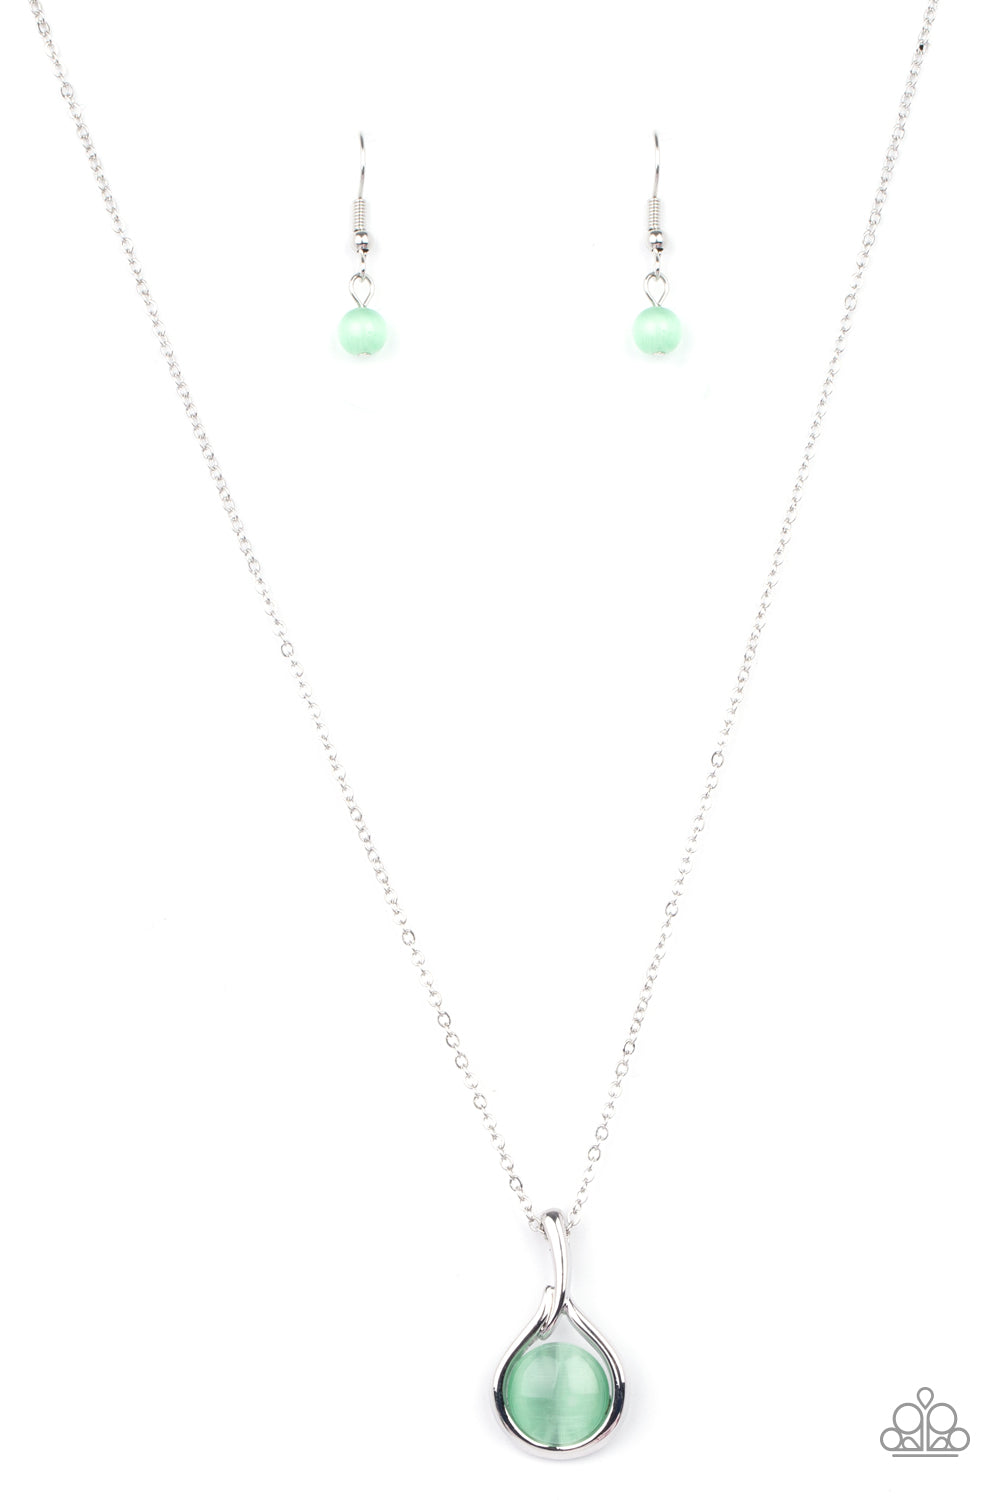 Fairy Lights - Green Necklace Set - Princess Glam Shop